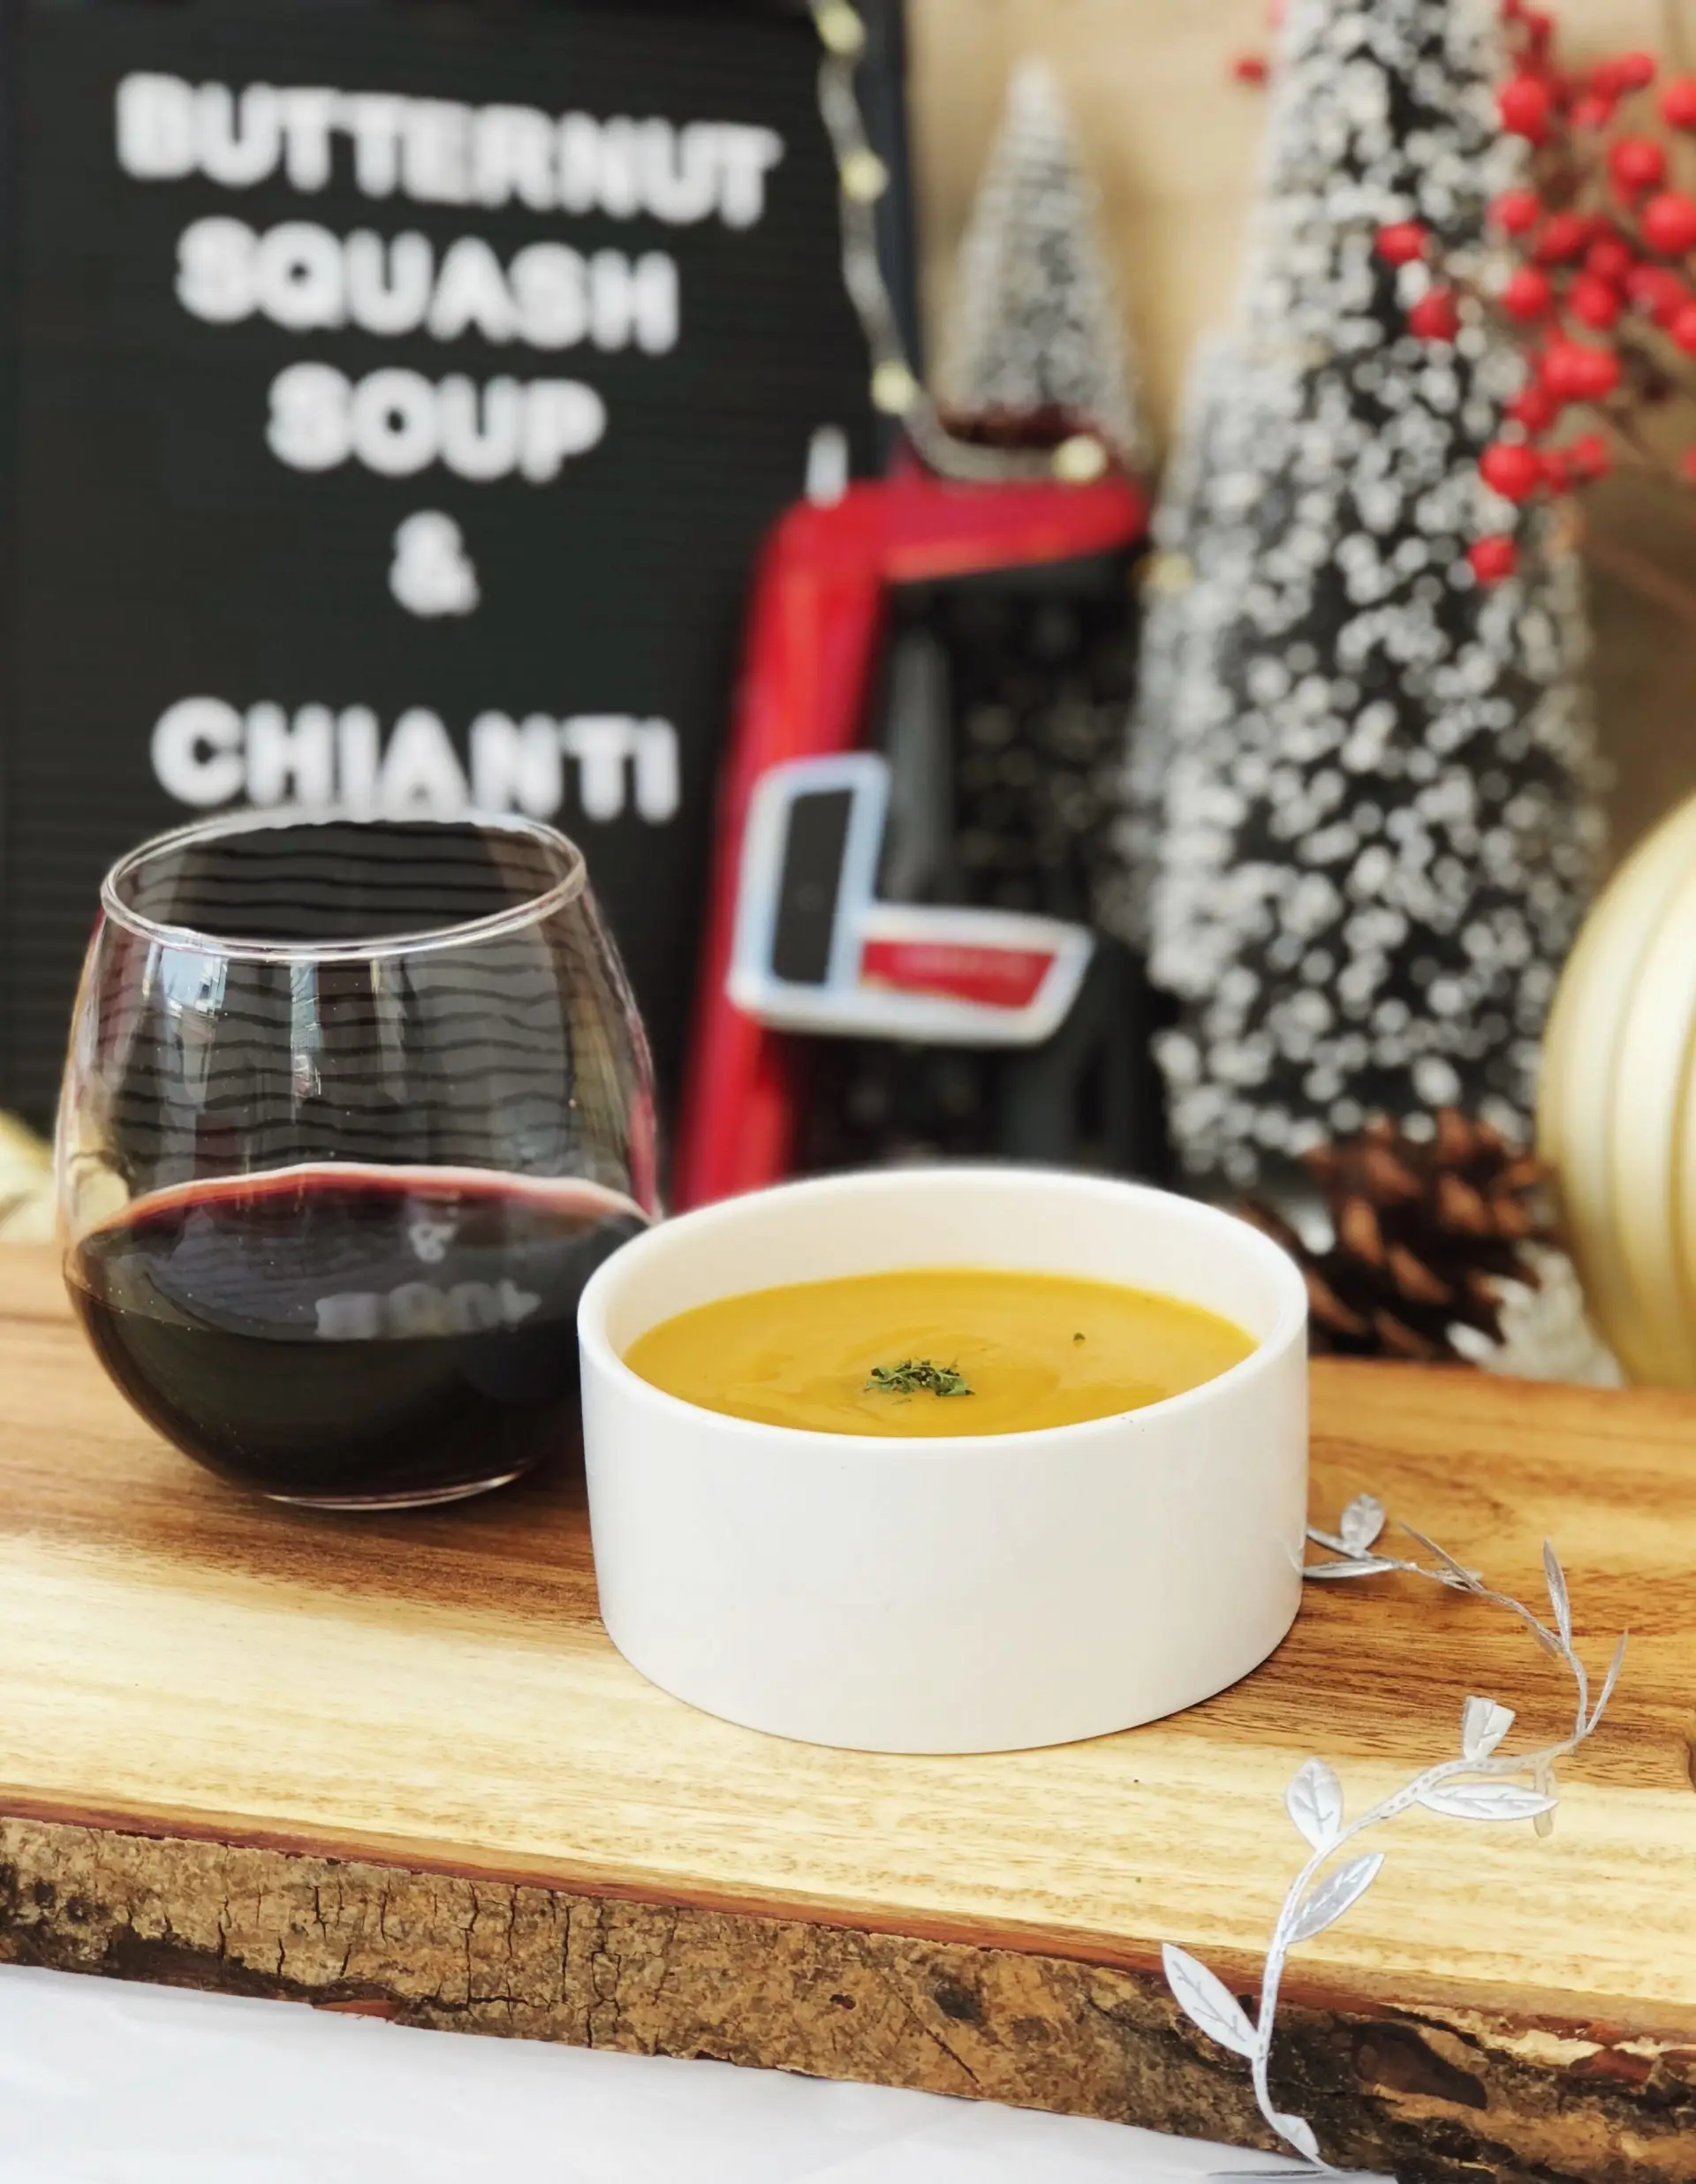 christmas wine pairings butternut squash soup and chianti